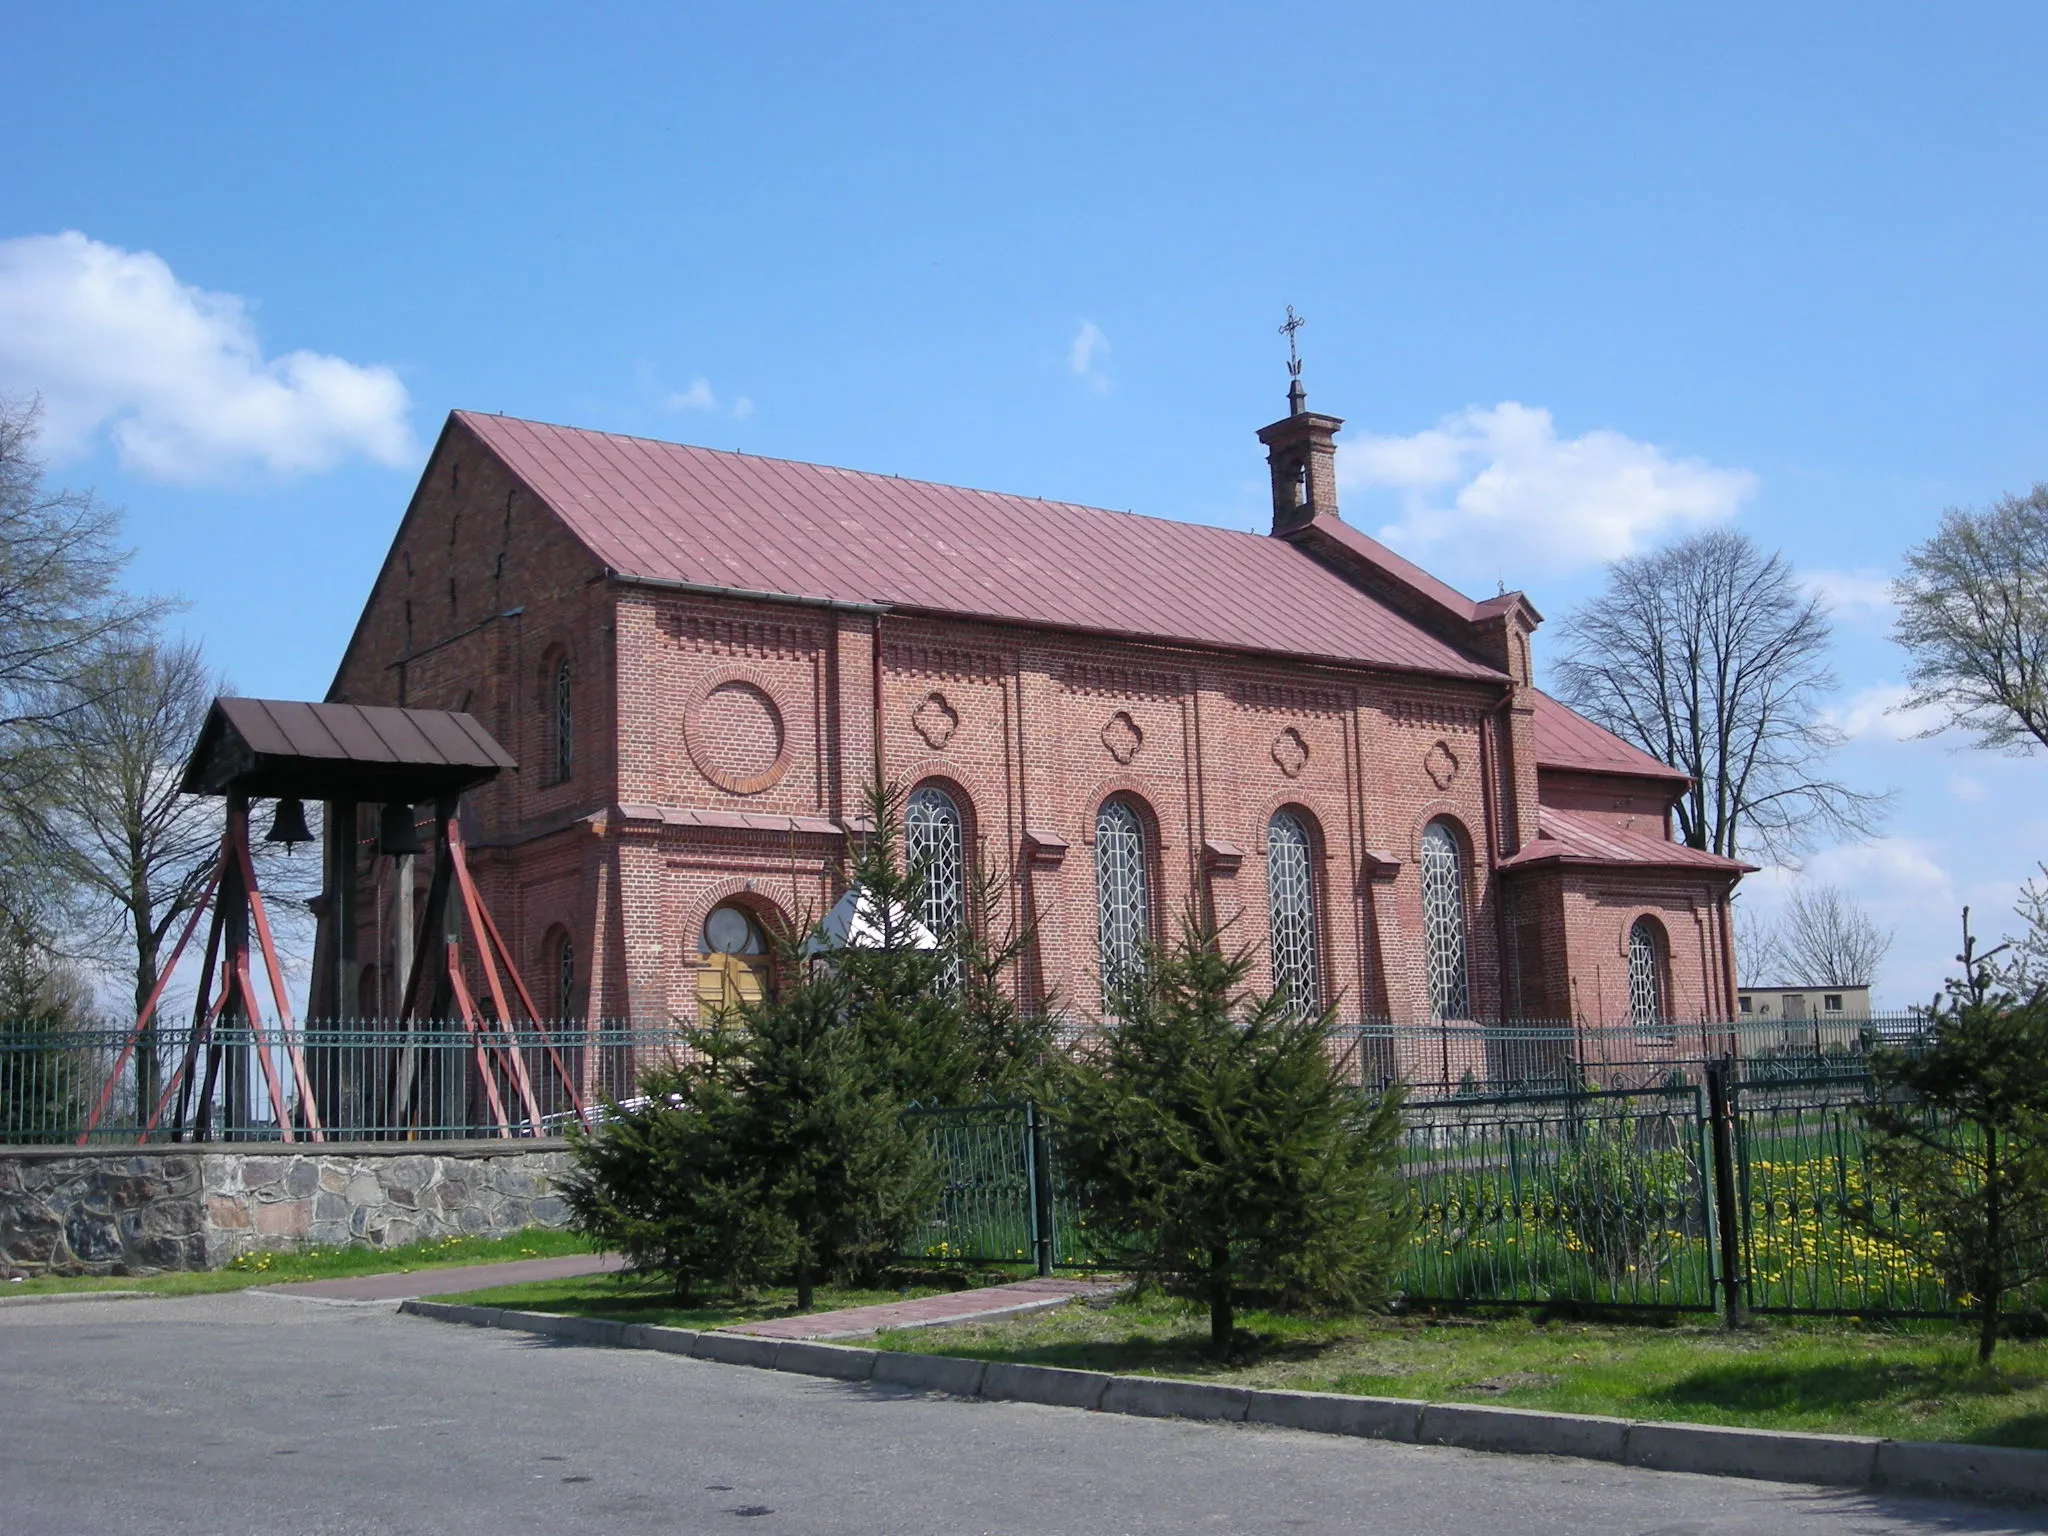 Photo showing: Saint Lawrence church in Dobrzejewice, Poland.